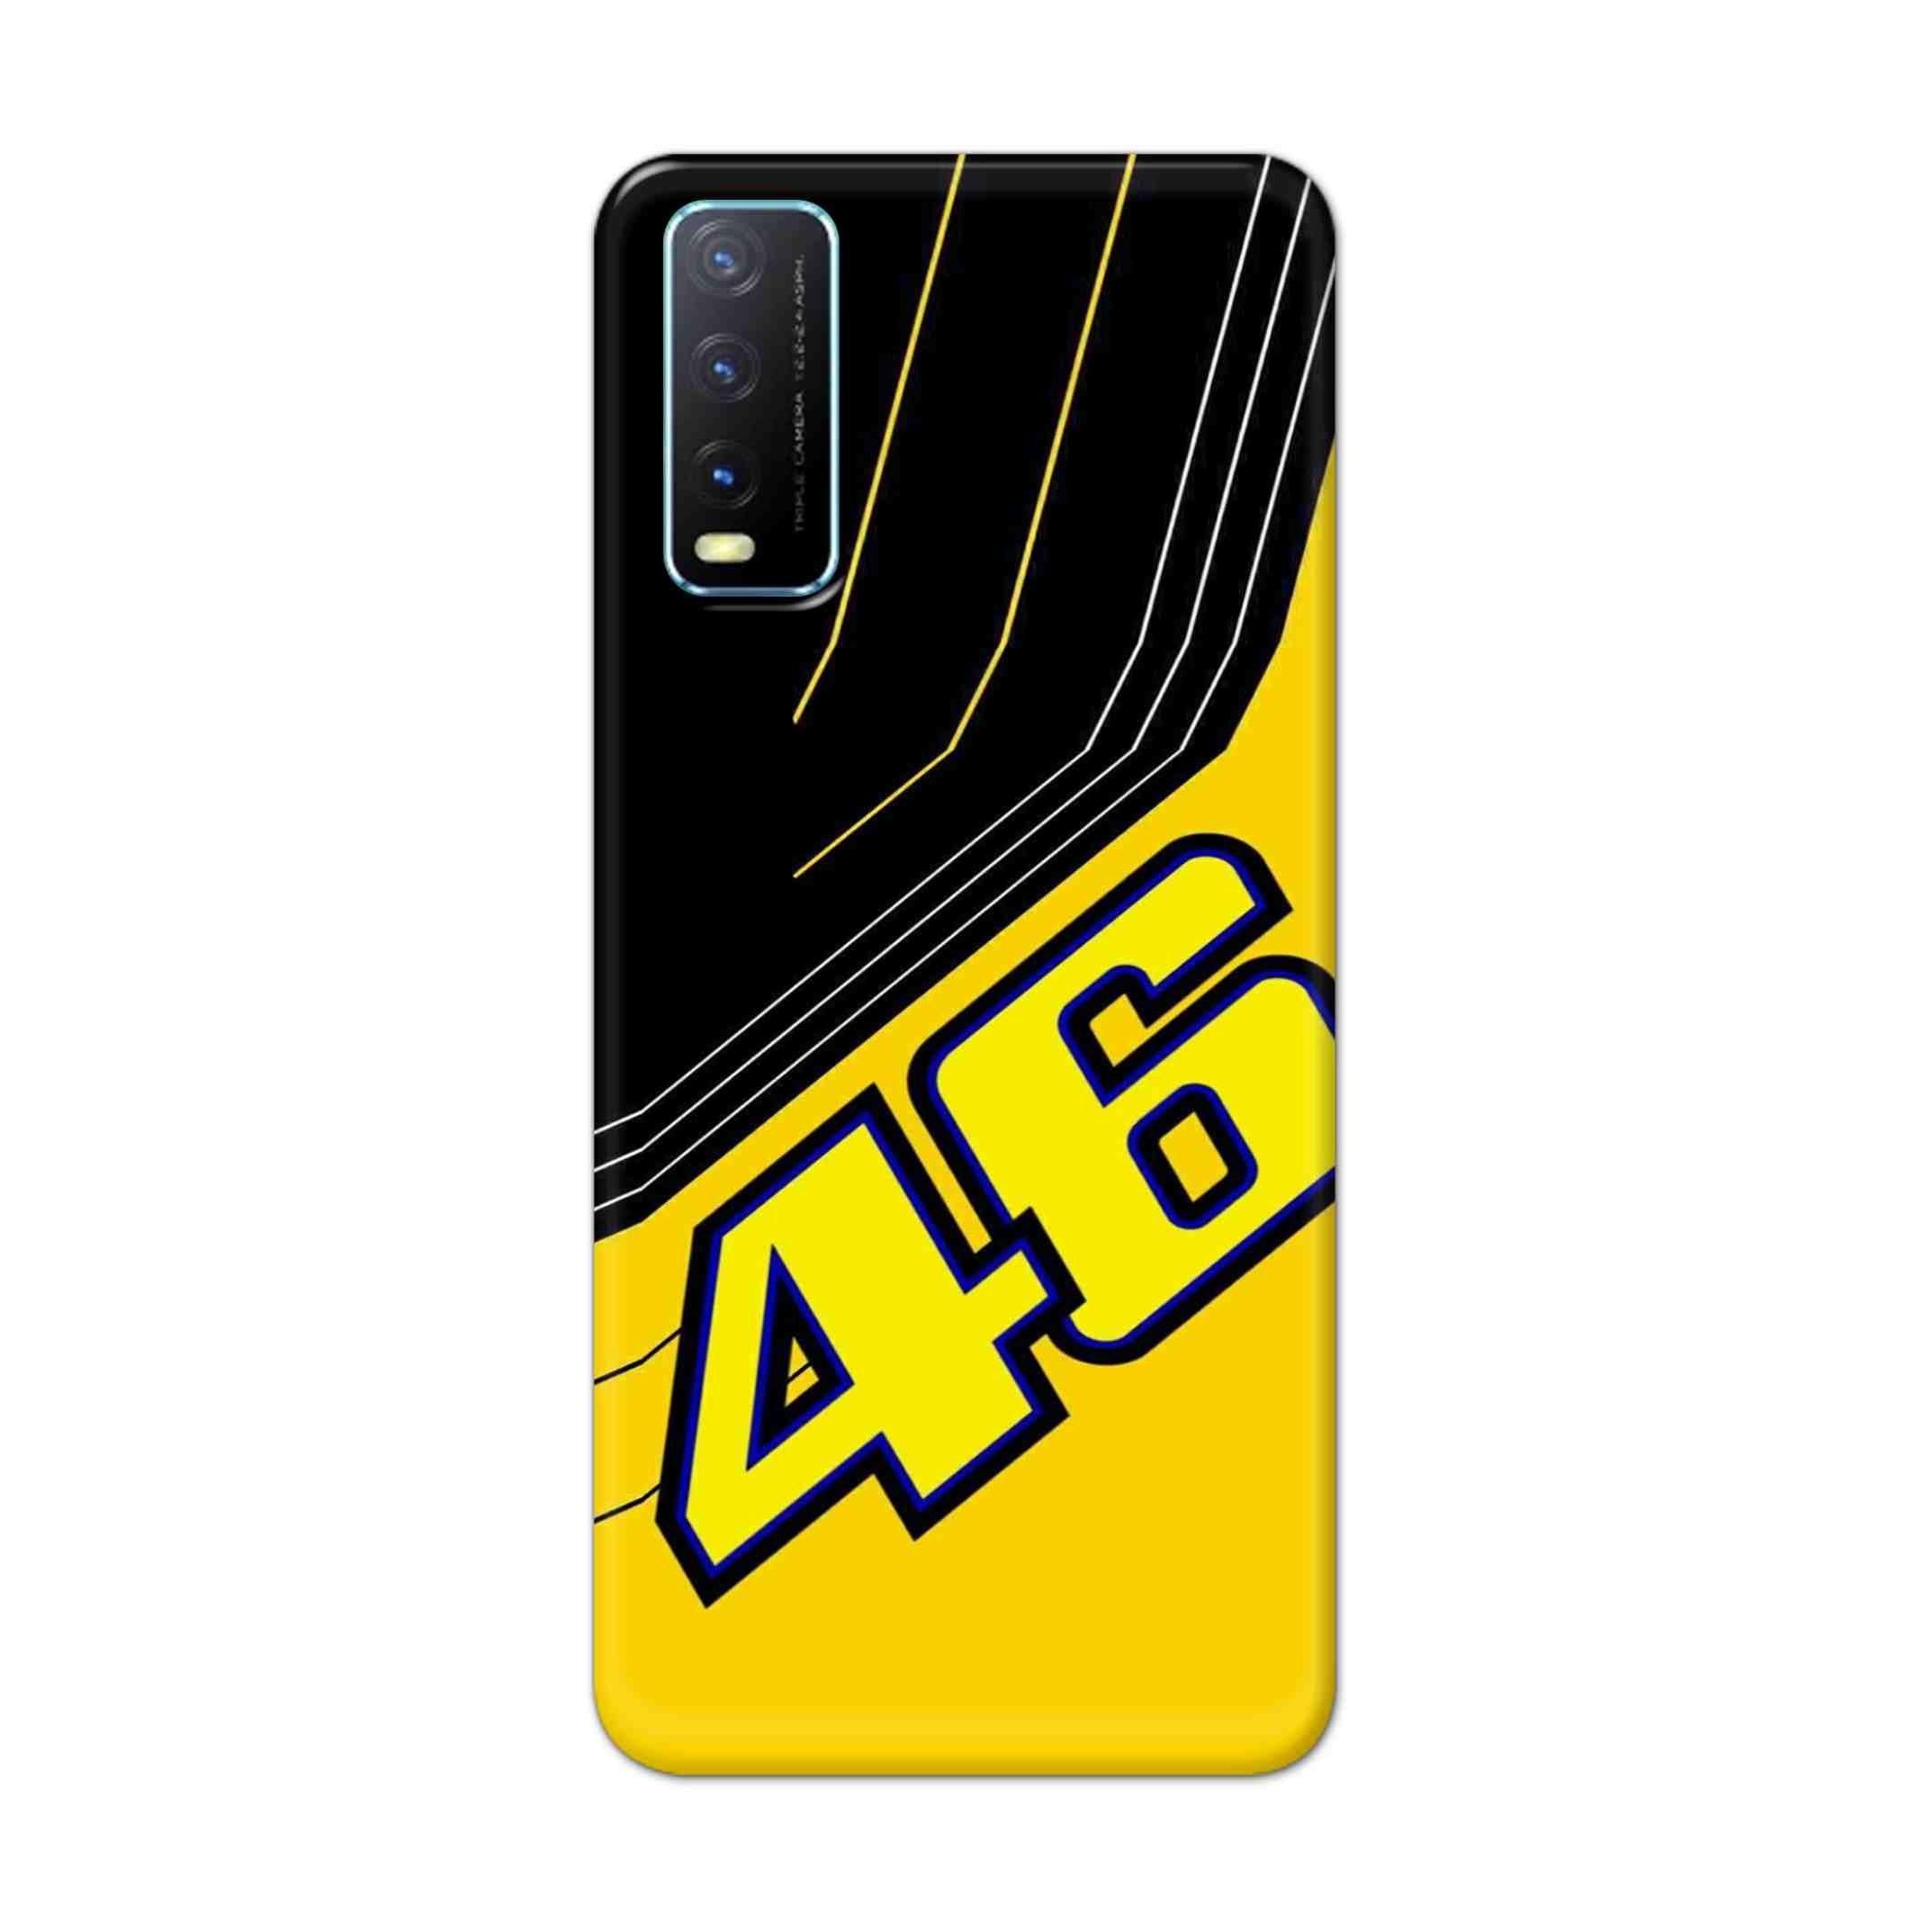 Buy 46 Hard Back Mobile Phone Case Cover For Vivo Y20 Online